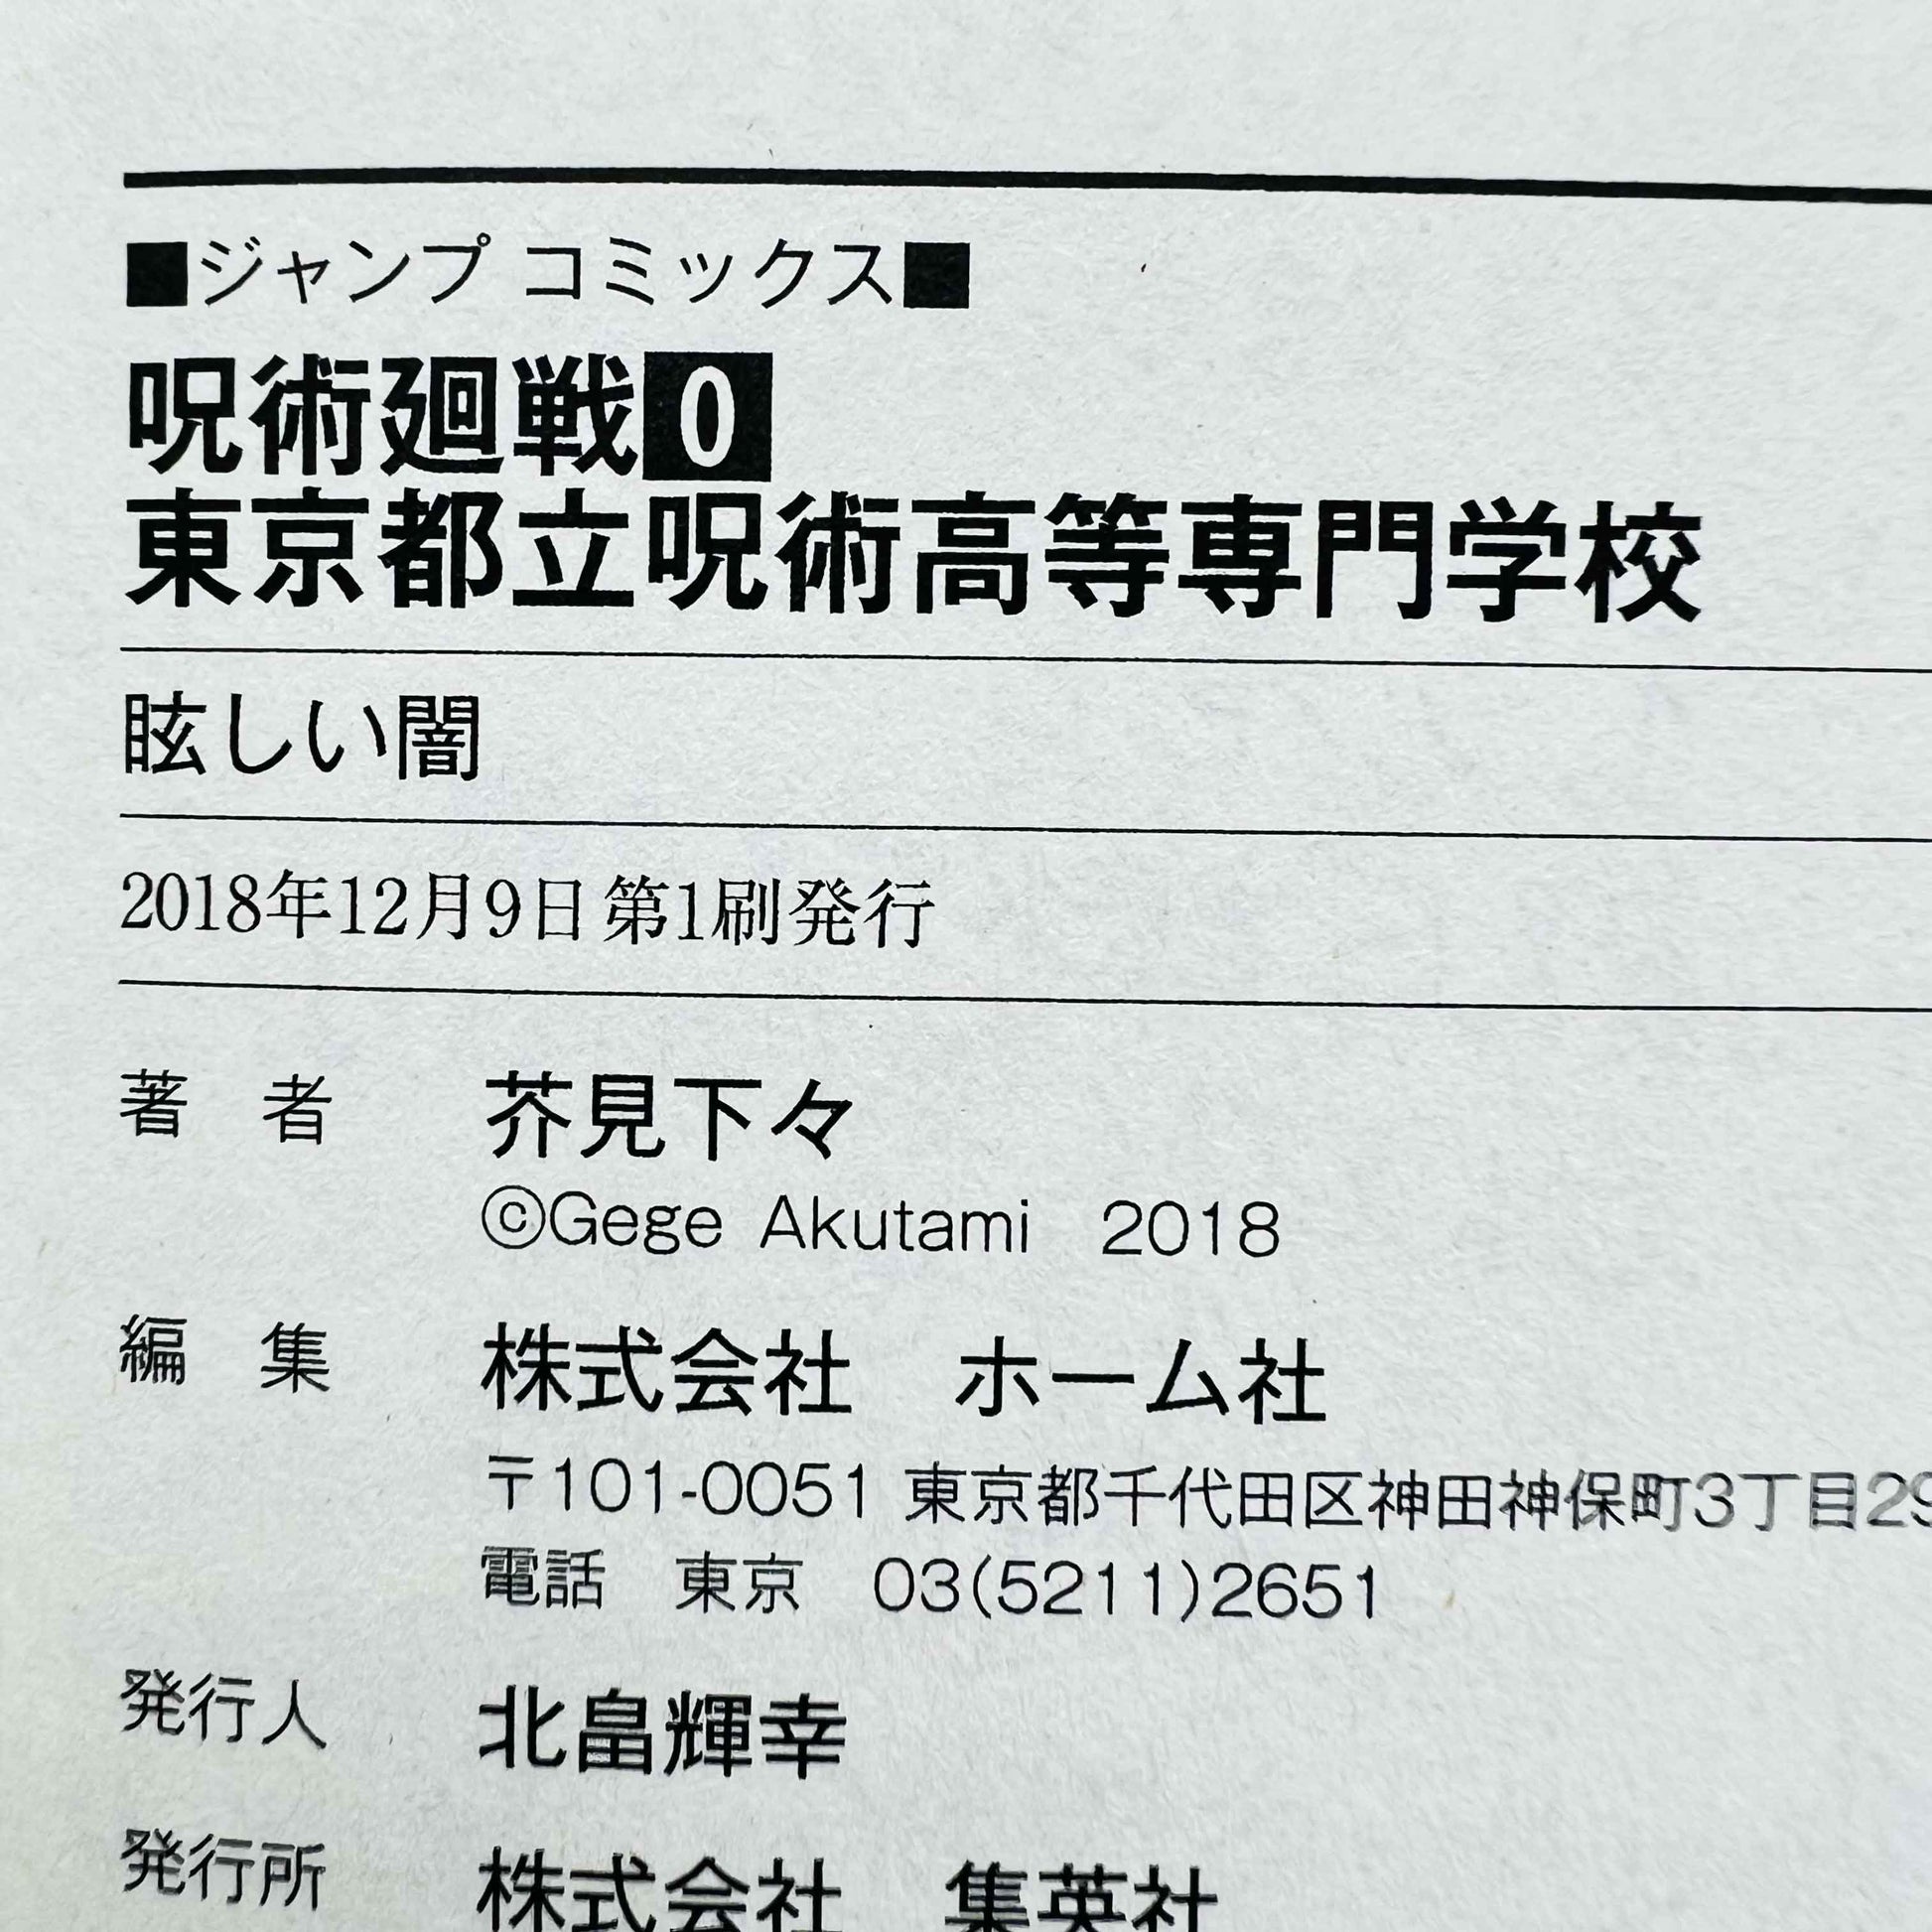 Jujutsu Kaisen - Volume 00 - 1stPrint.net - 1st First Print Edition Manga Store - M-KAISEN-00-003